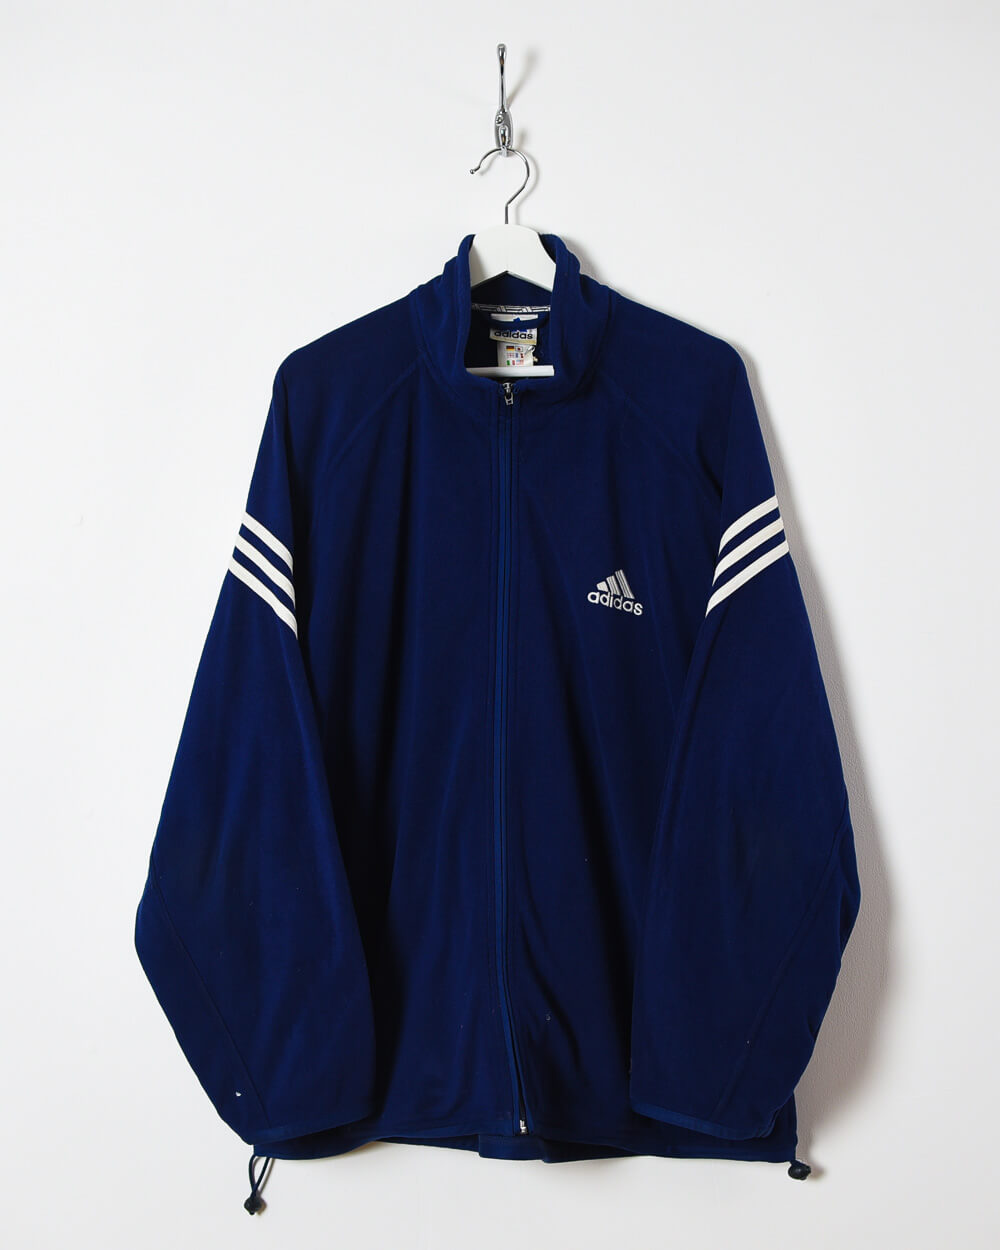 Adidas Fleece - X-Large - Domno Vintage 90s, 80s, 00s Retro and Vintage Clothing 